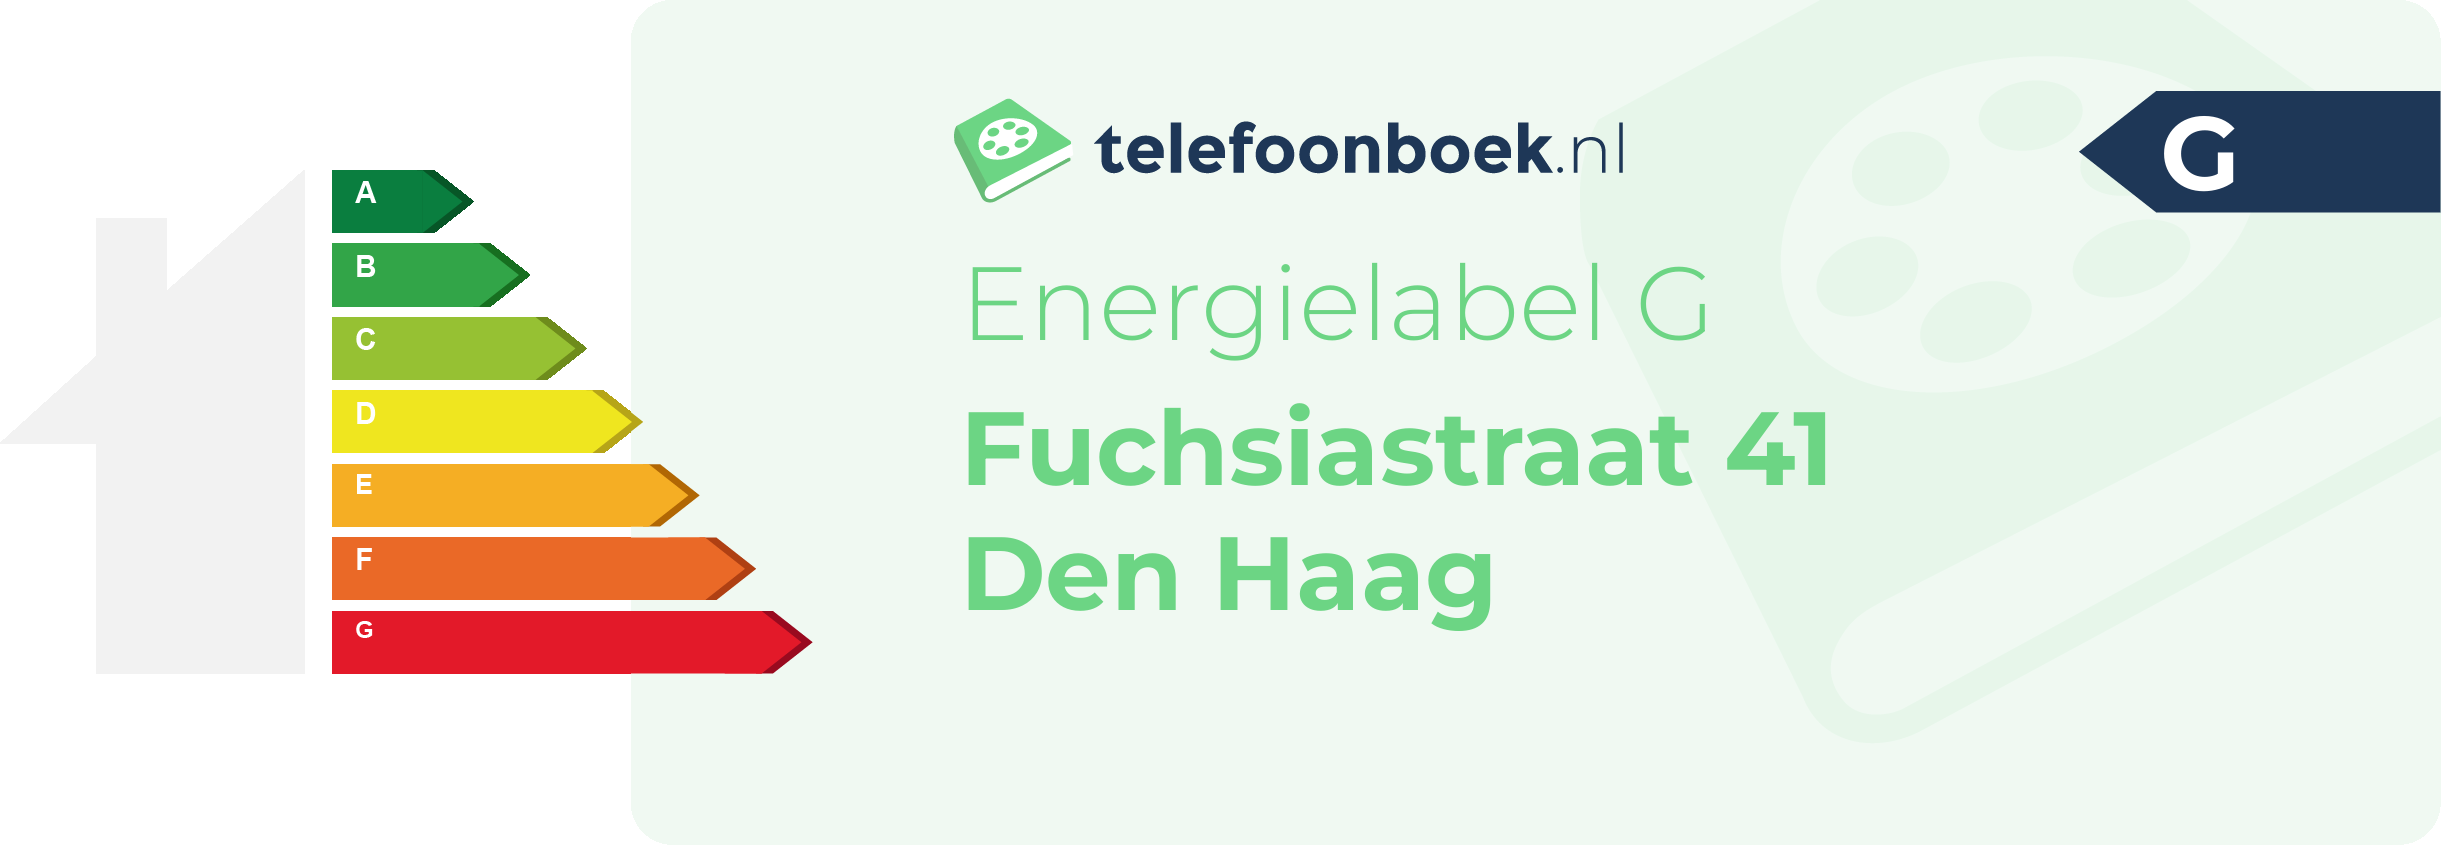 Energielabel Fuchsiastraat 41 Den Haag